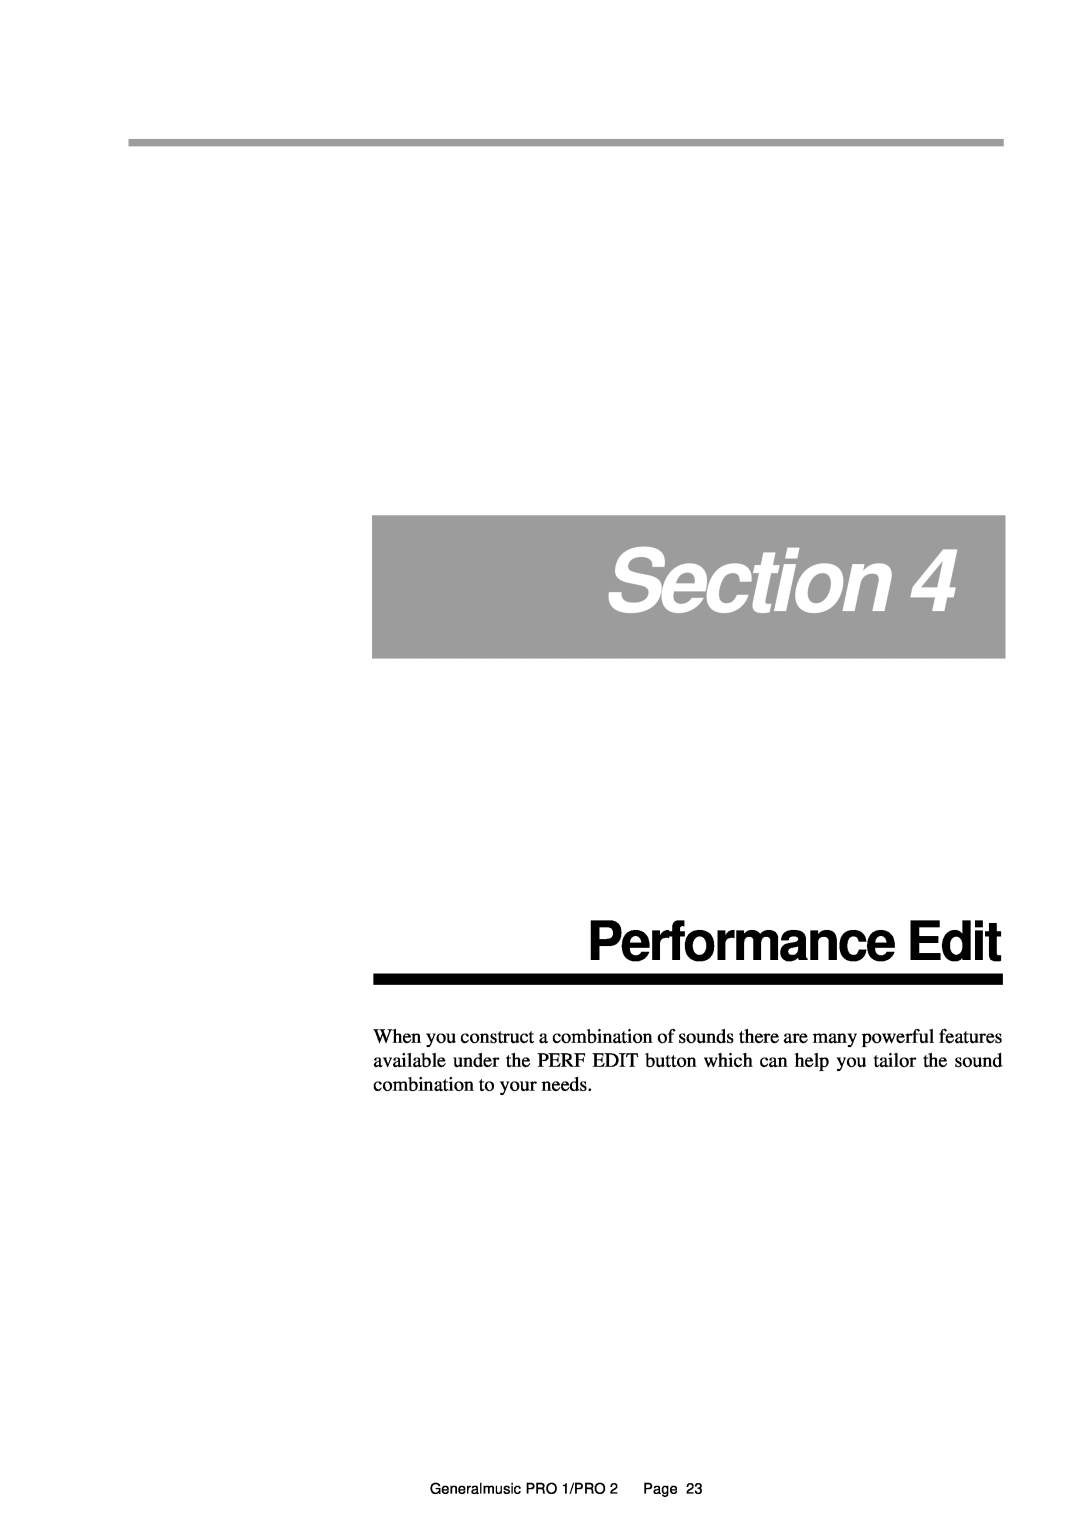 Peavey Pro 2, Pro 1 owner manual Performance Edit, Section, Generalmusic PRO 1/PRO 2 Page 